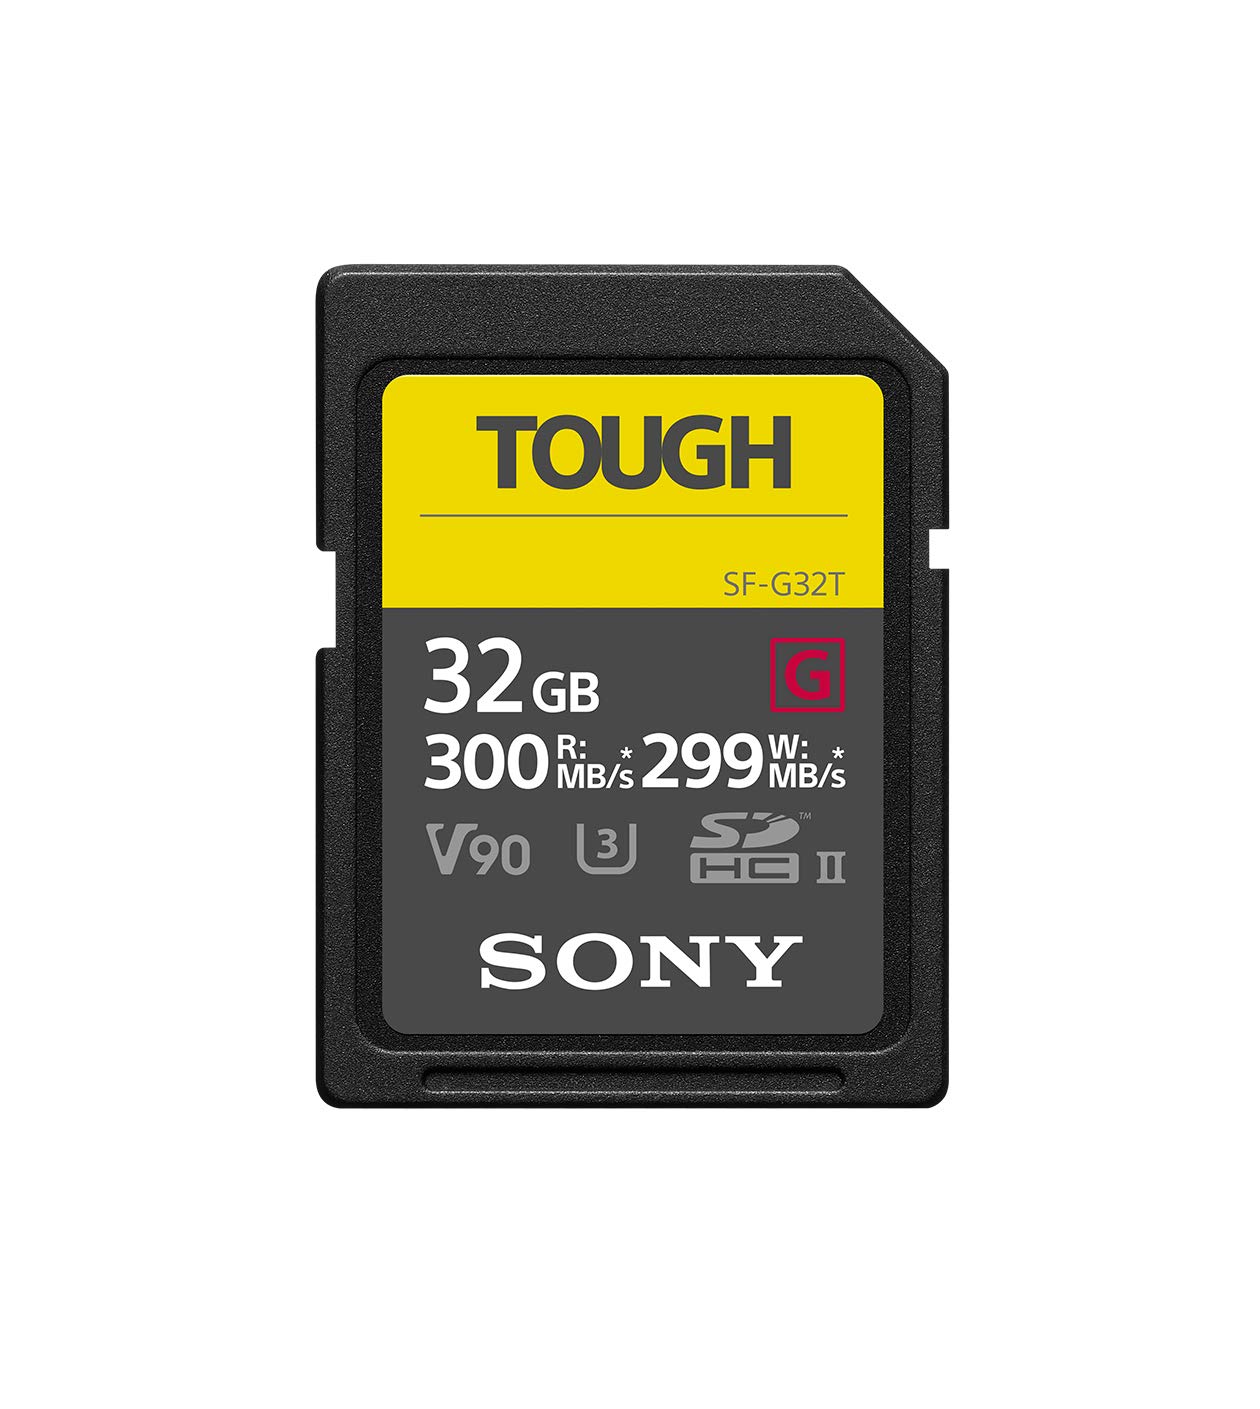 Sony SF-G32T SD-Speicherkarte (32 GB, UHS-II, SD Tough, G Serie)